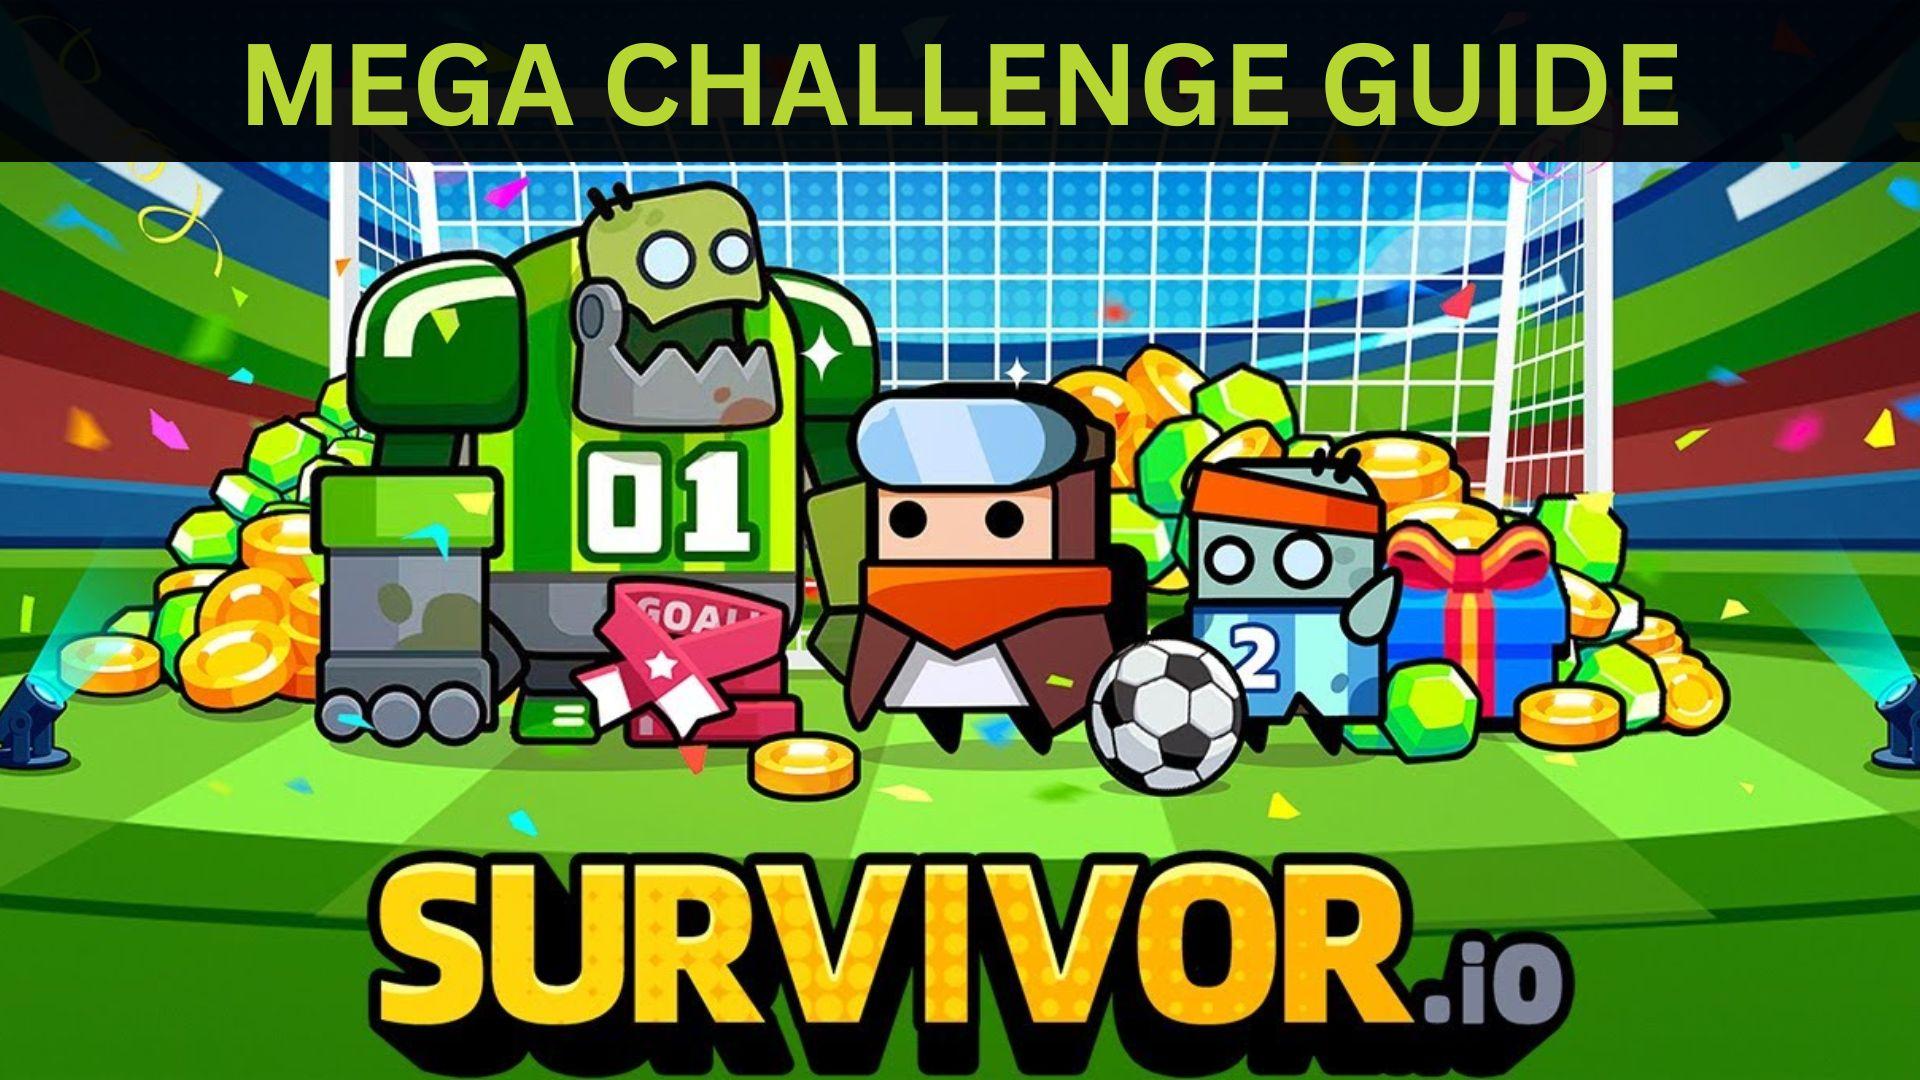 Survivor.io Beginner's Guide and Gameplay Walkthrough-Game Guides-LDPlayer